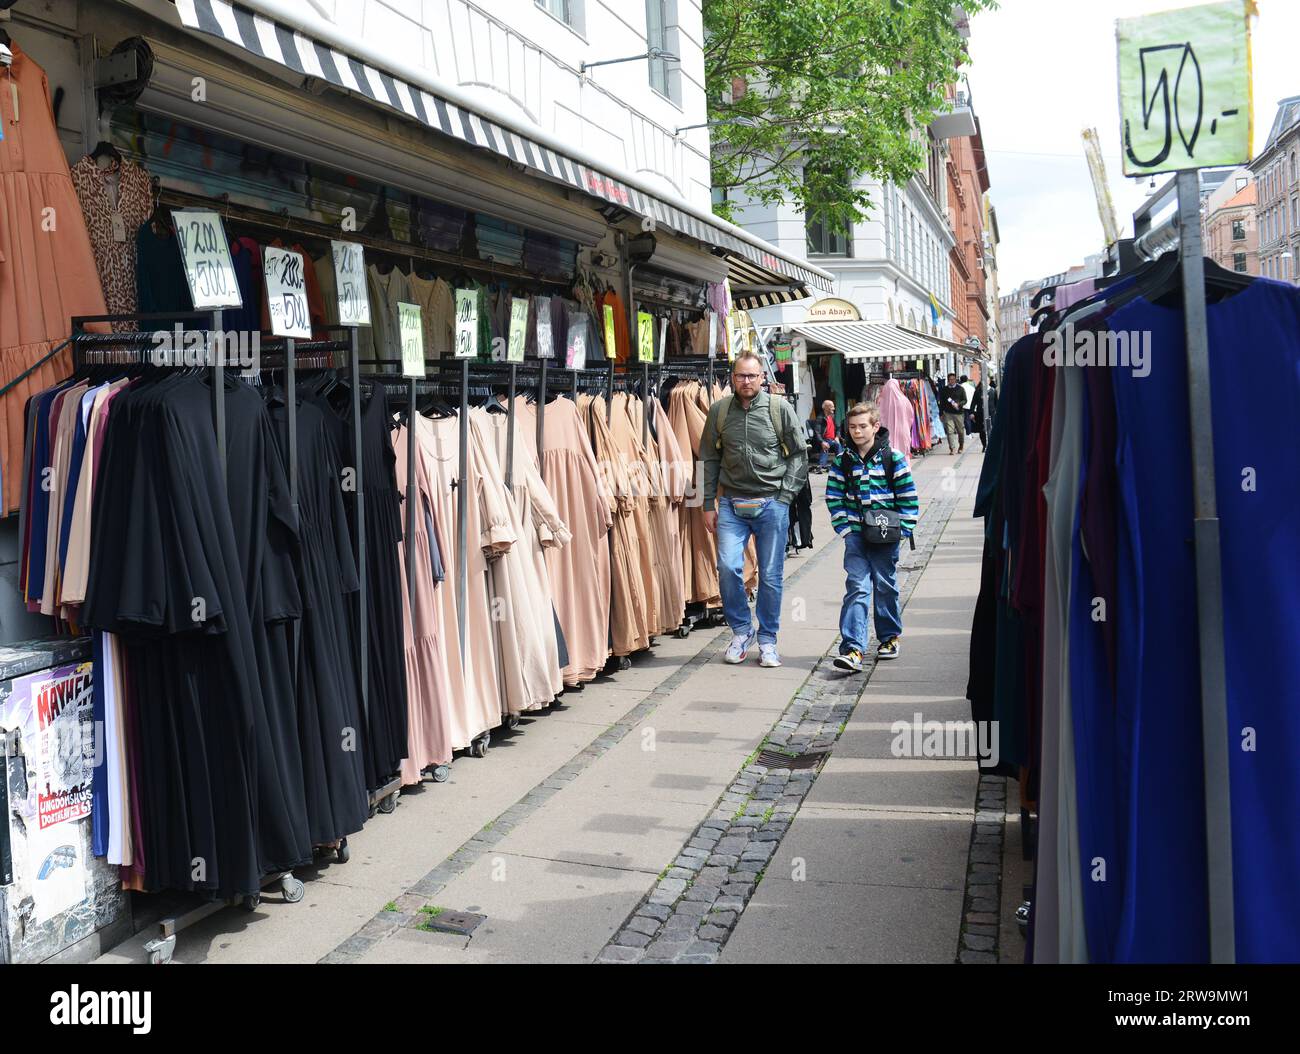 Abaya shops on Nørrebrogade street in Copenhagen, Denmark. Stock Photo